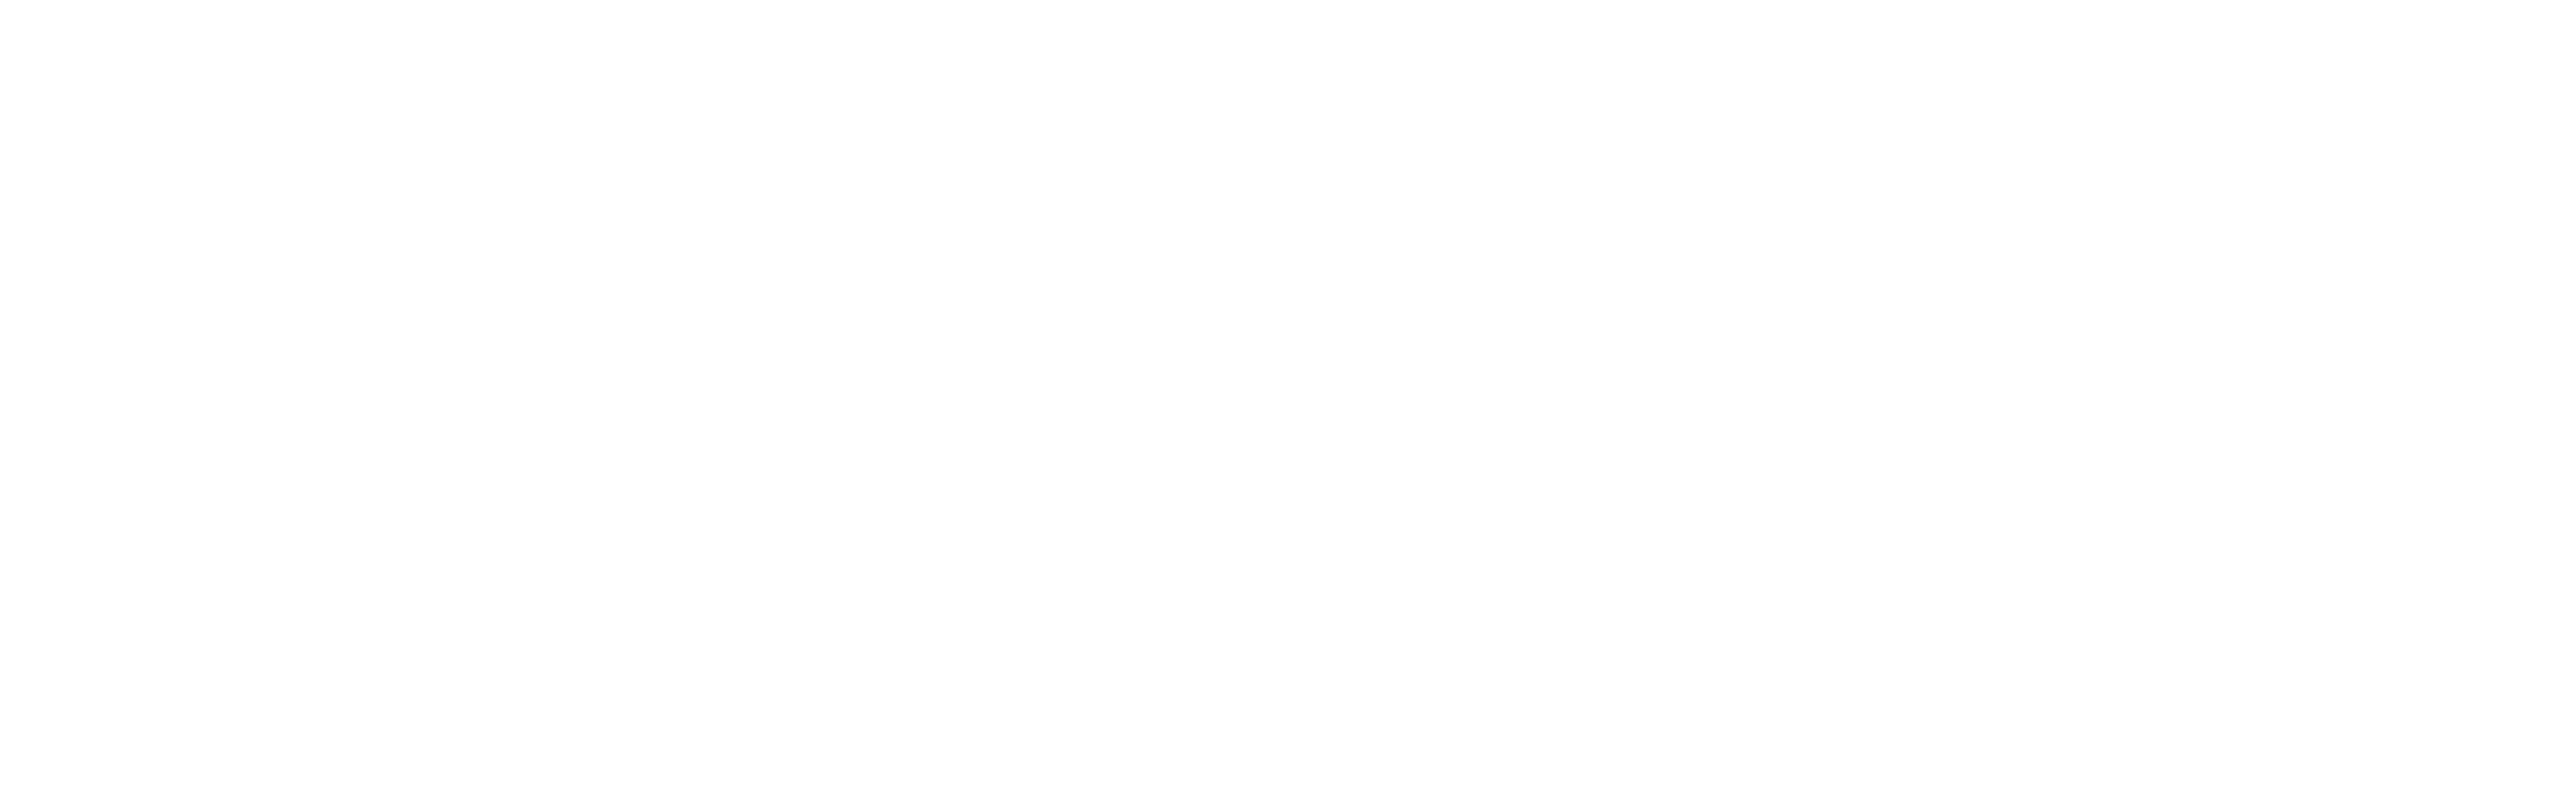 church-logo-image